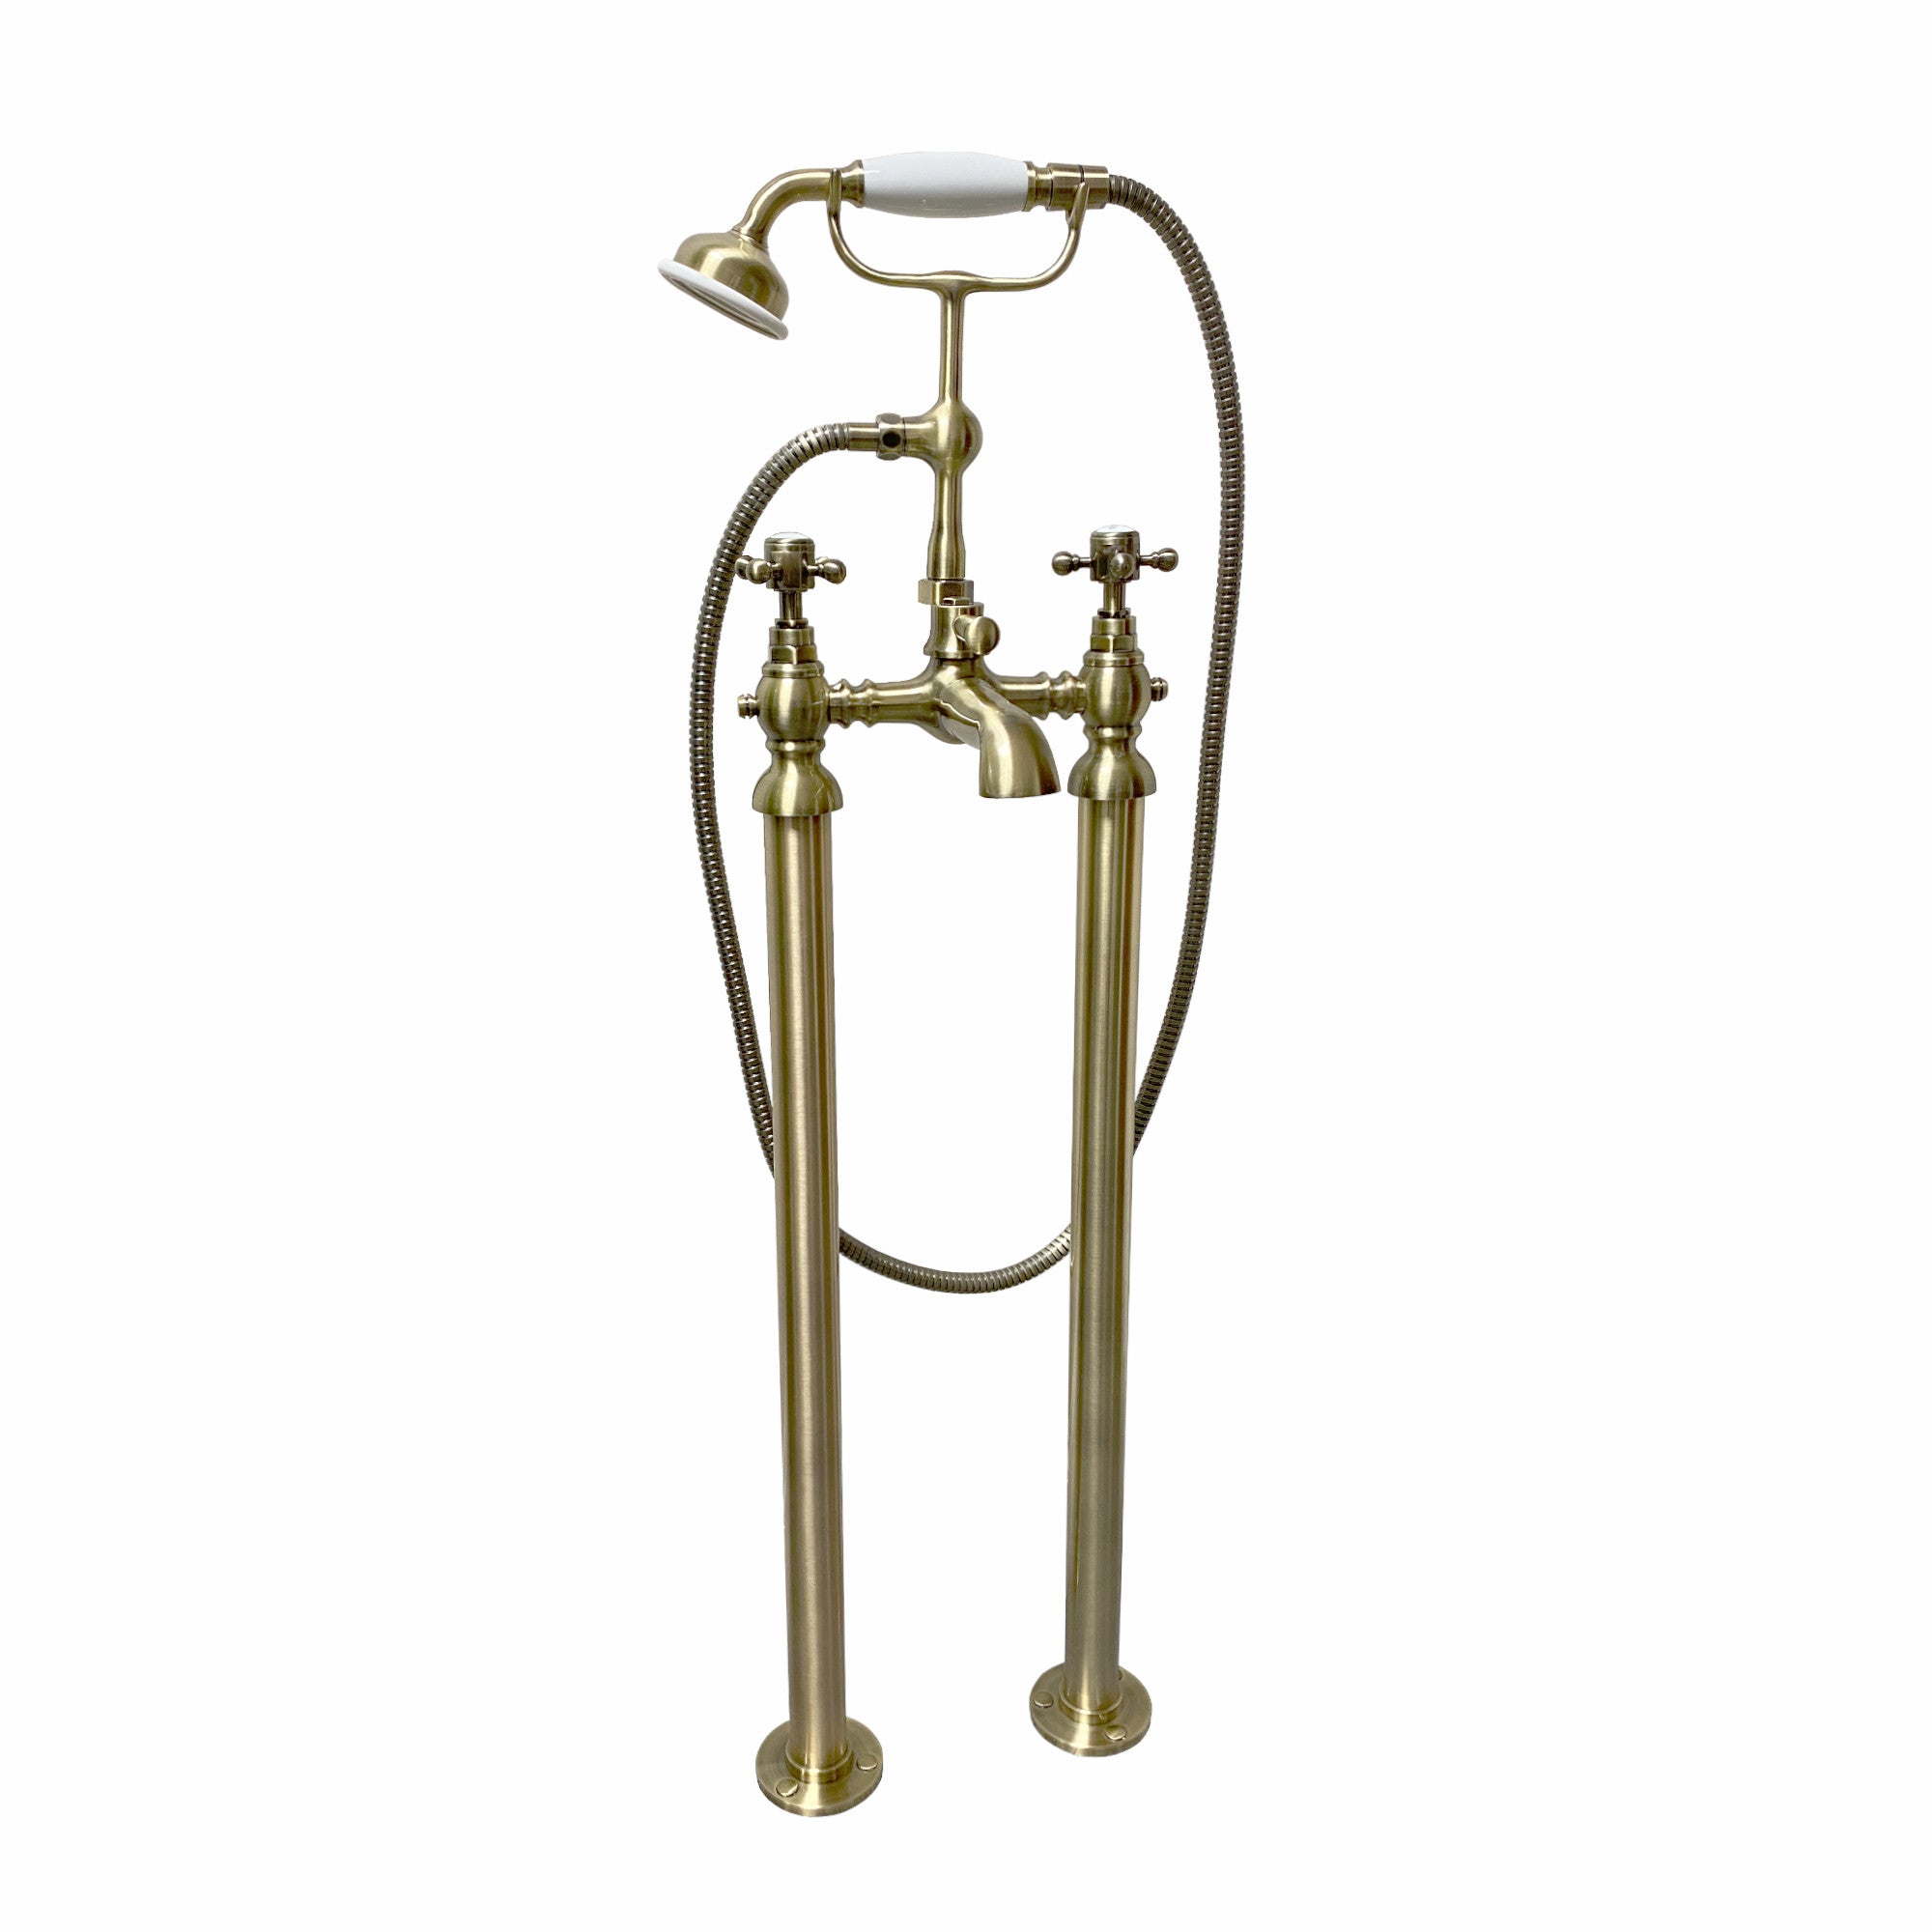 Camberley traditional freestanding bath shower mixer - antique bronze